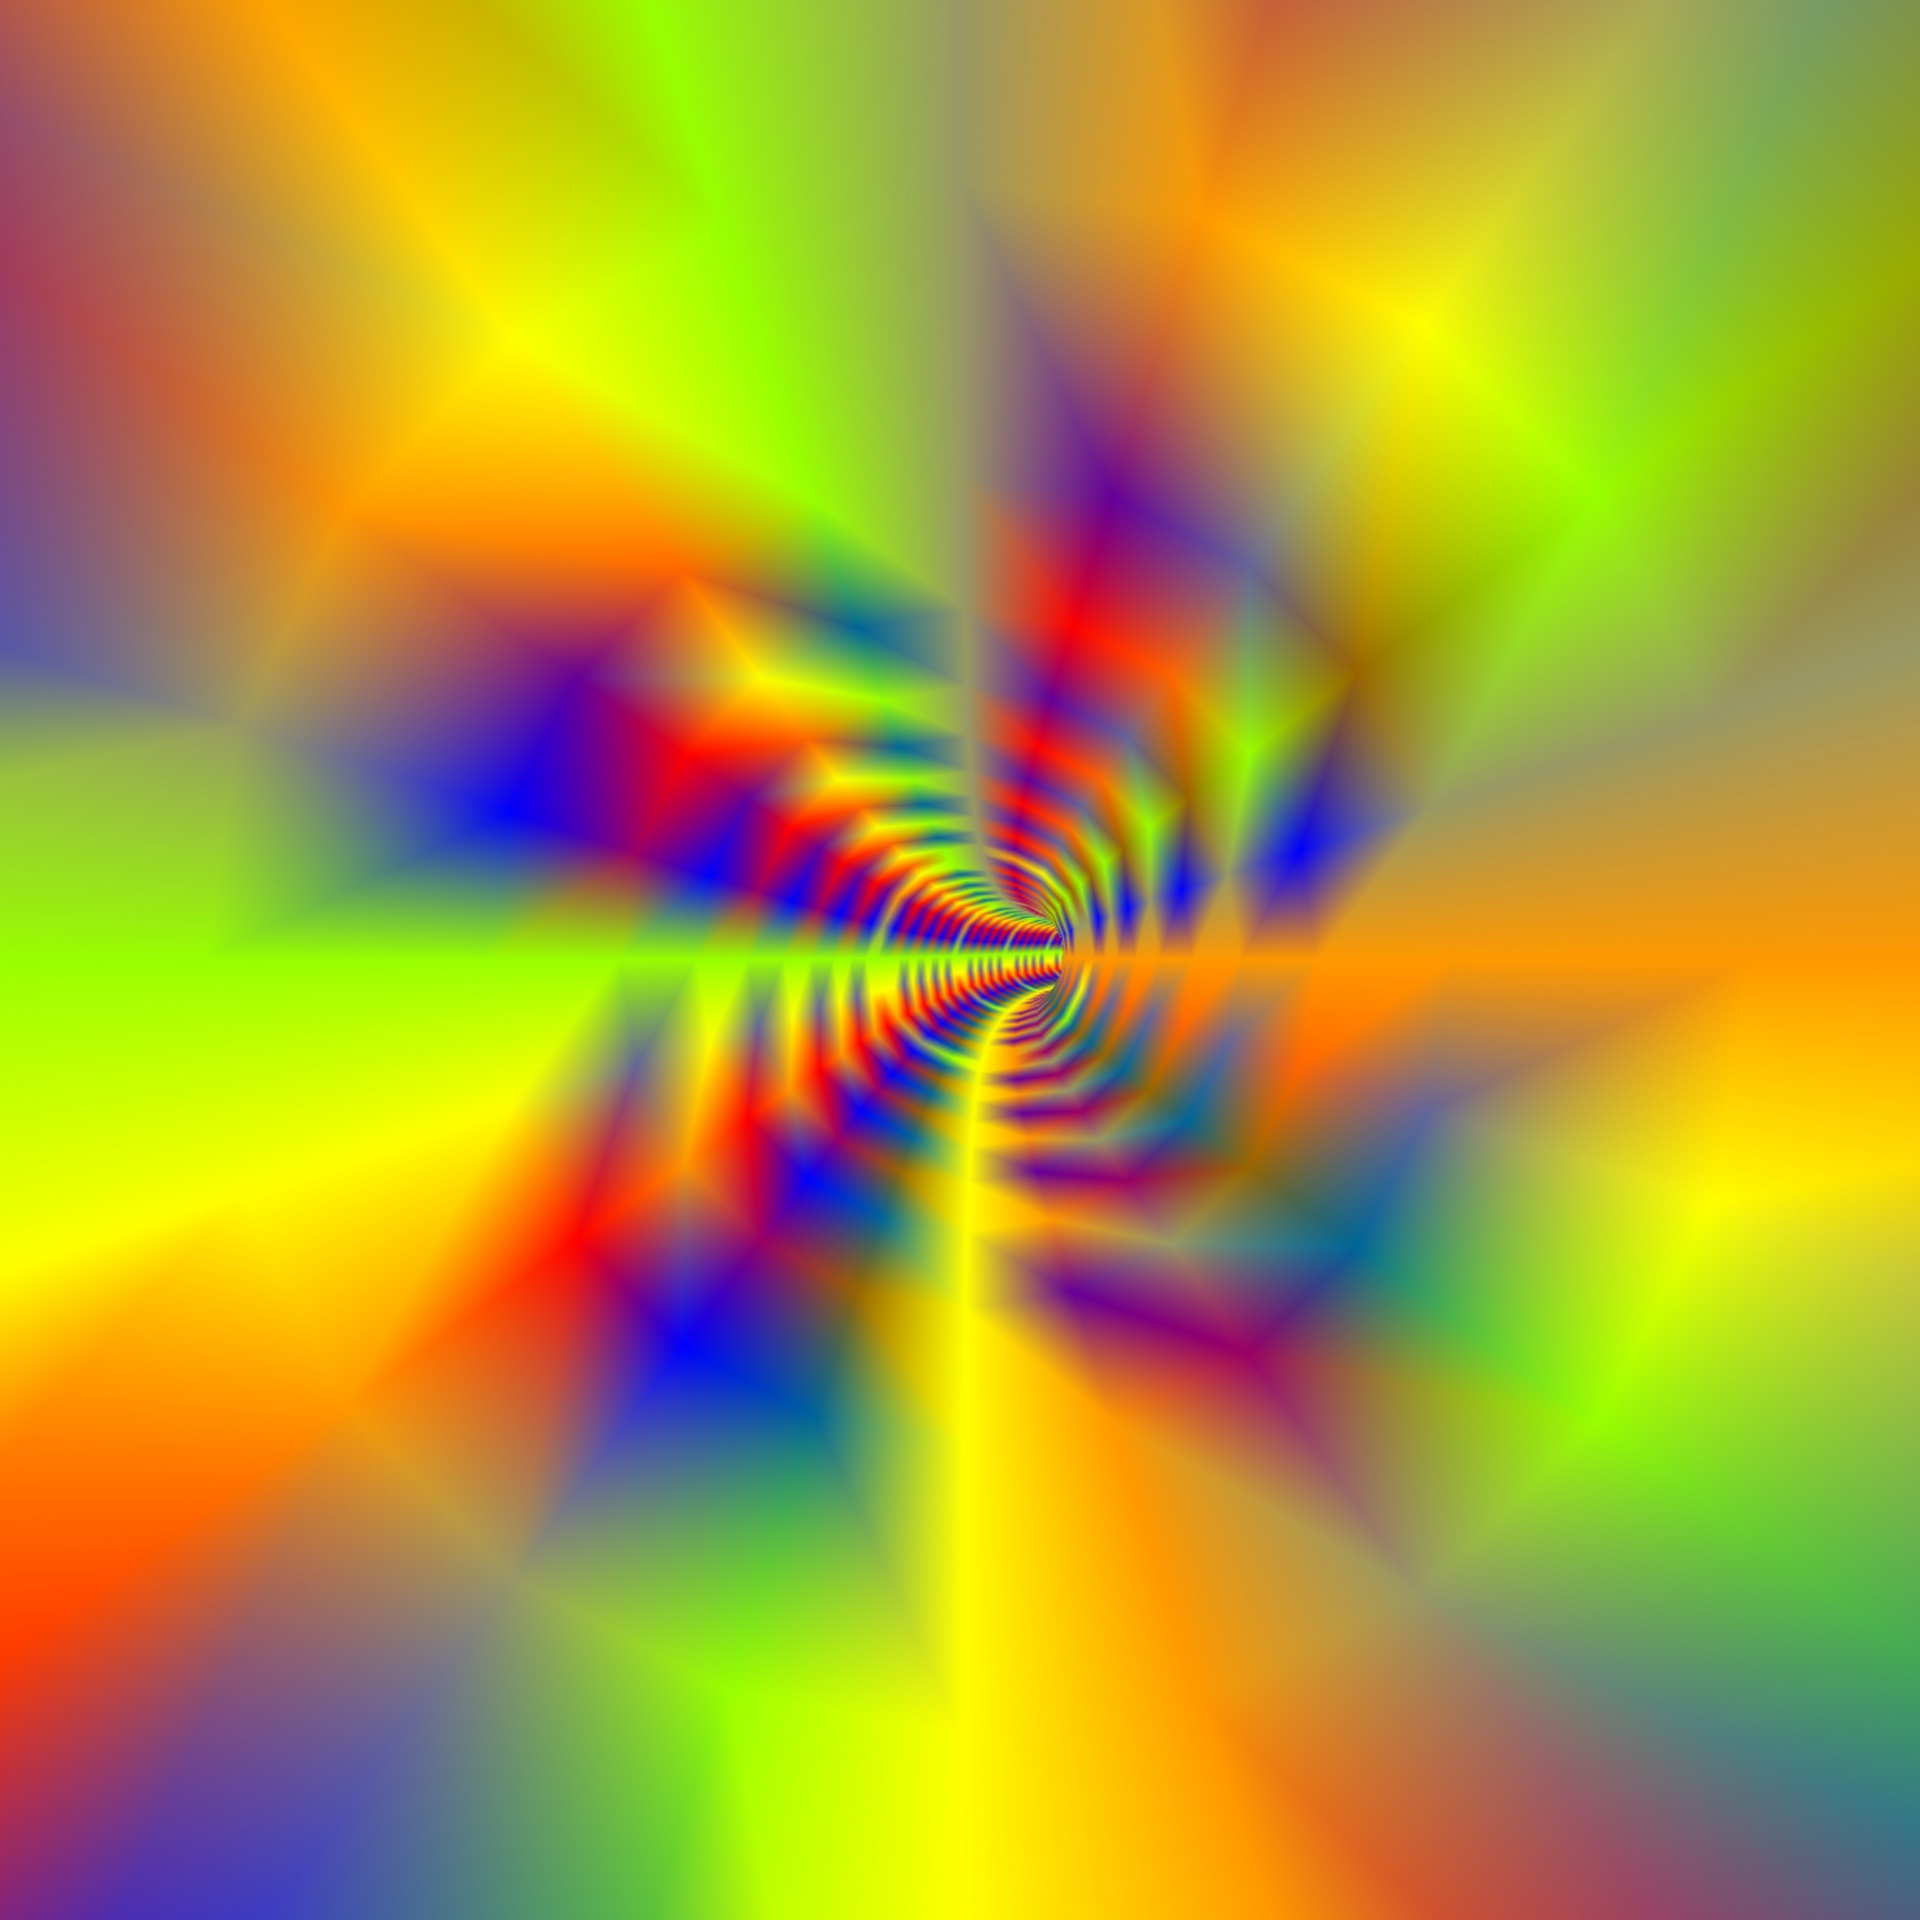 Edit free photo of Wallpaper,rainbow,tunnel,vortex,spiral - needpix.com